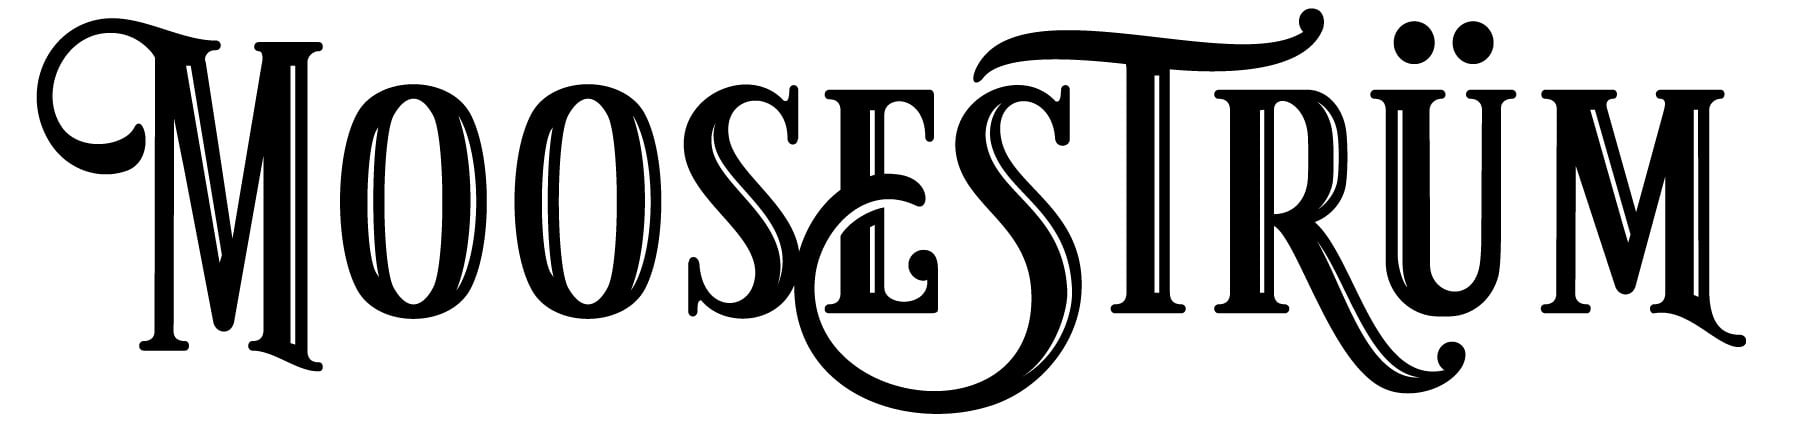 Moosestrum logo